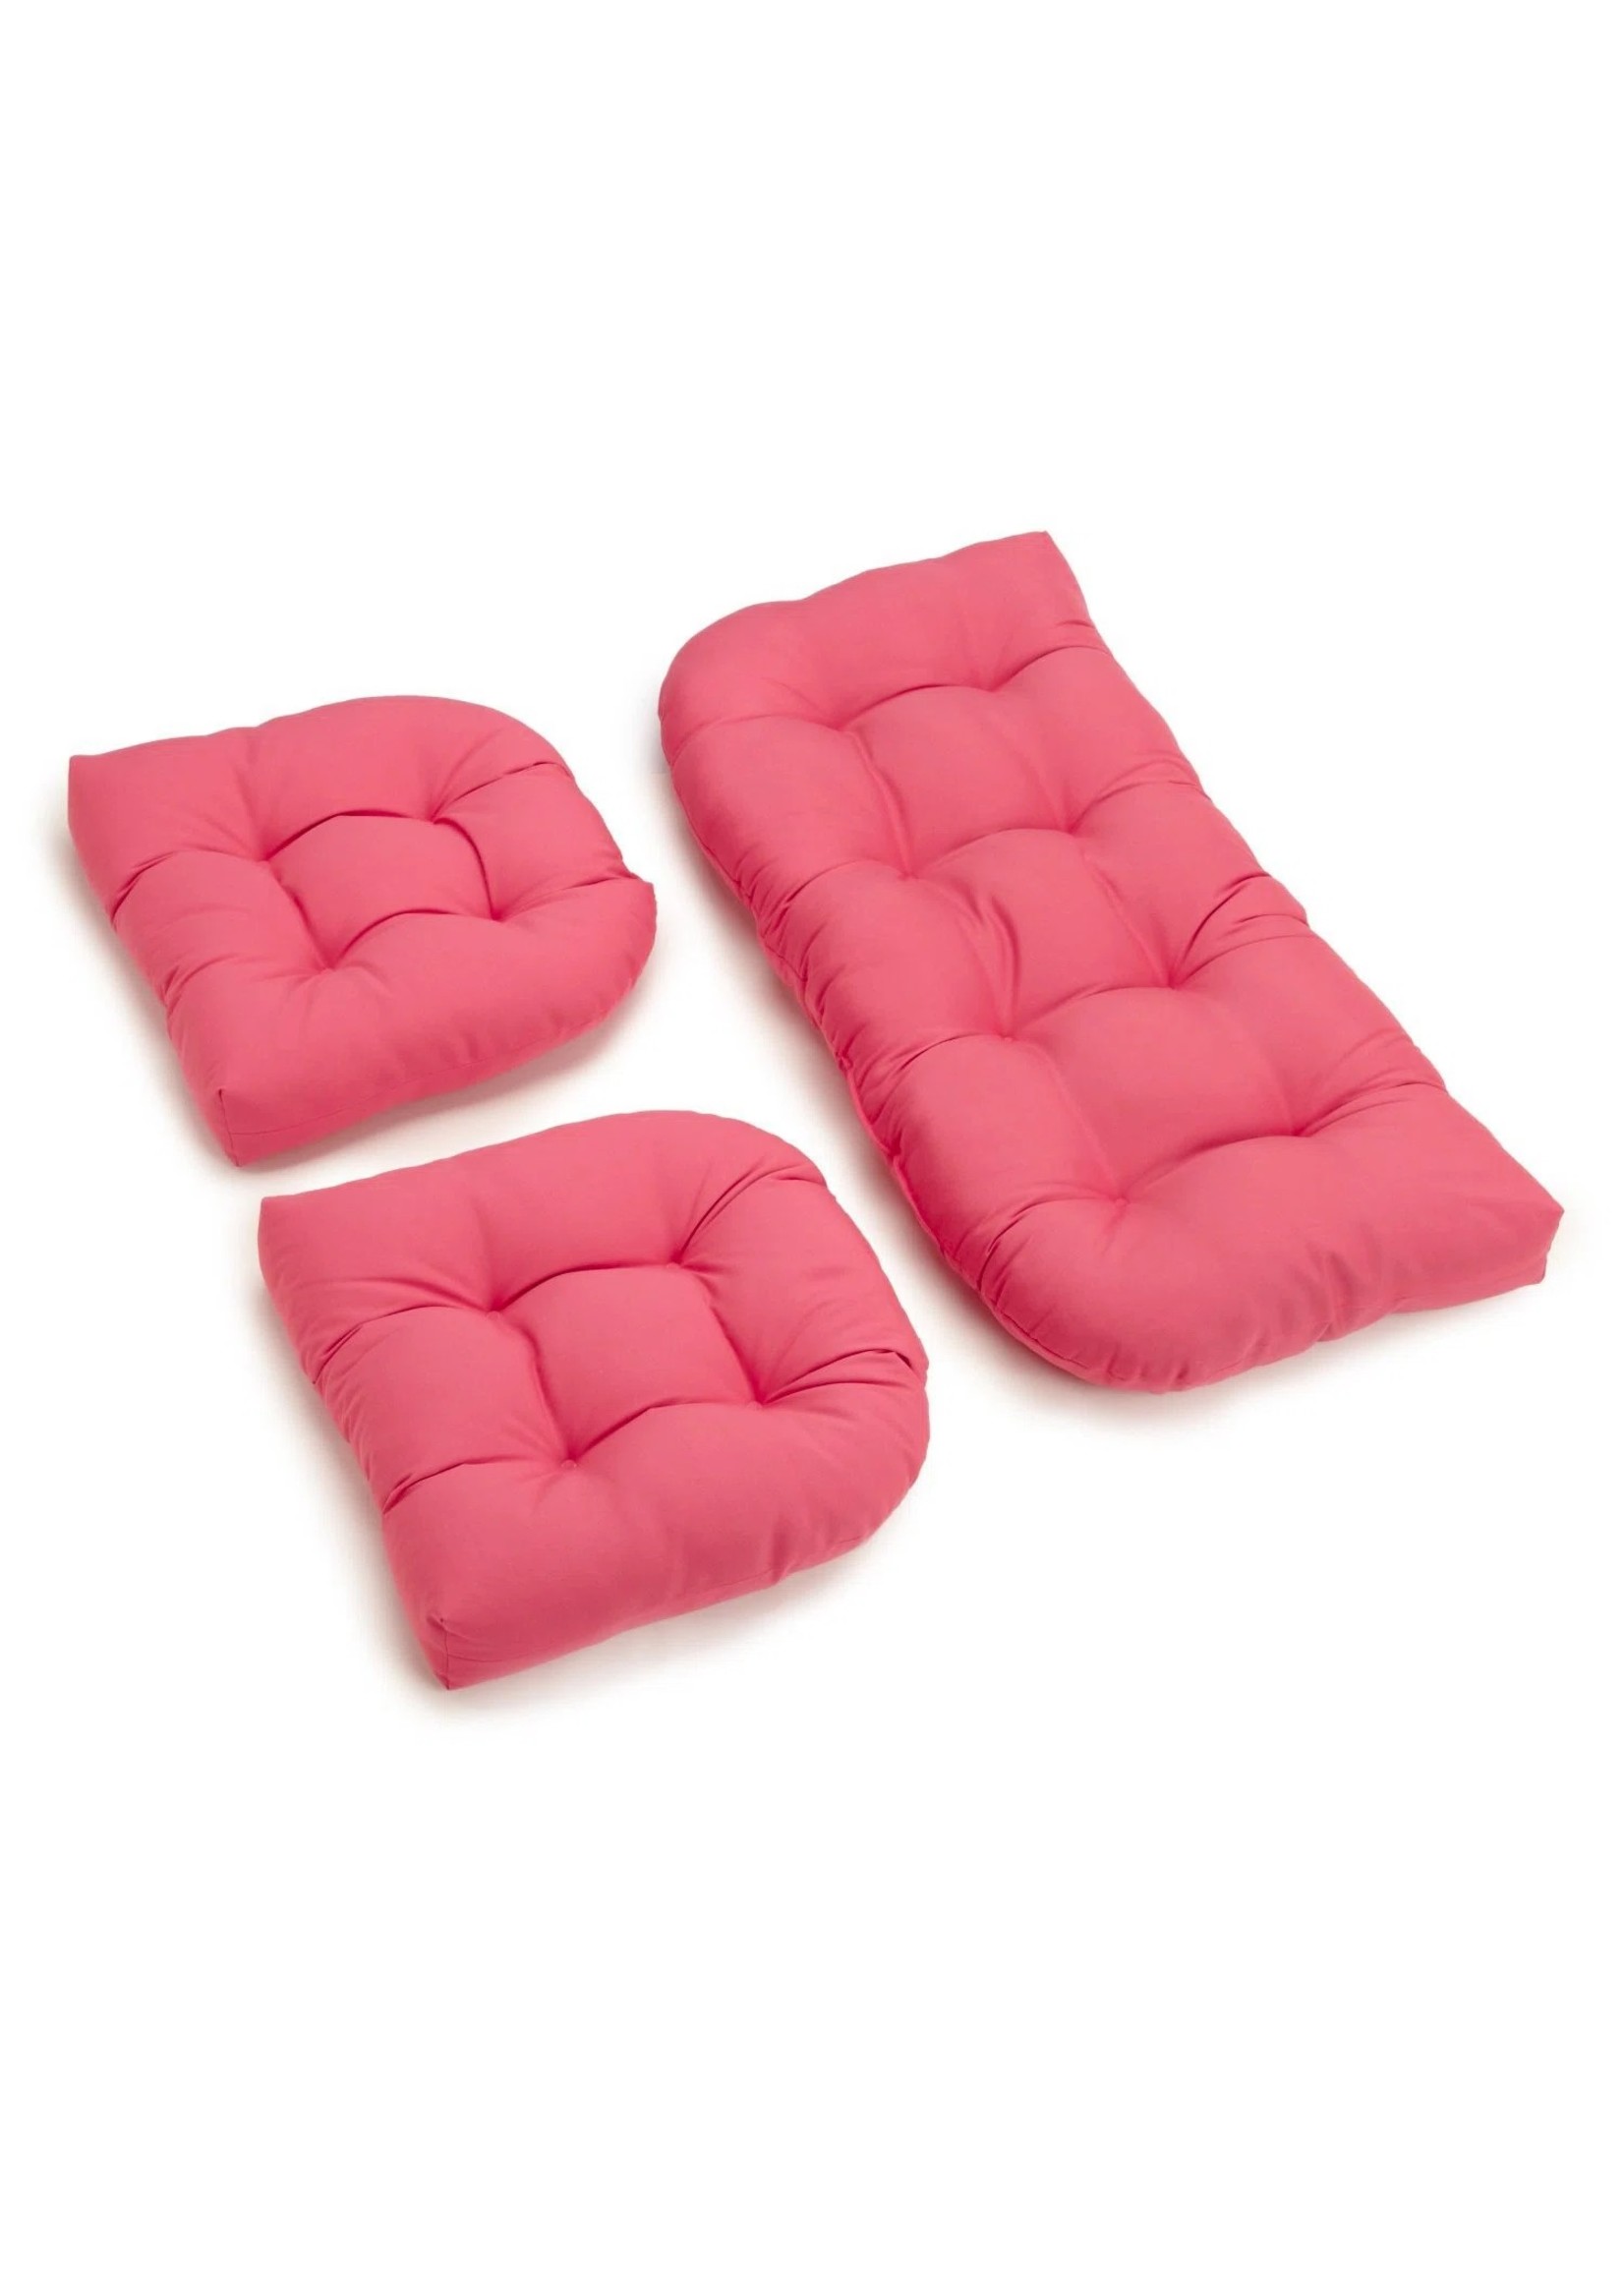 *3 Piece Indoor Settee Cushion Set - Bery Berry